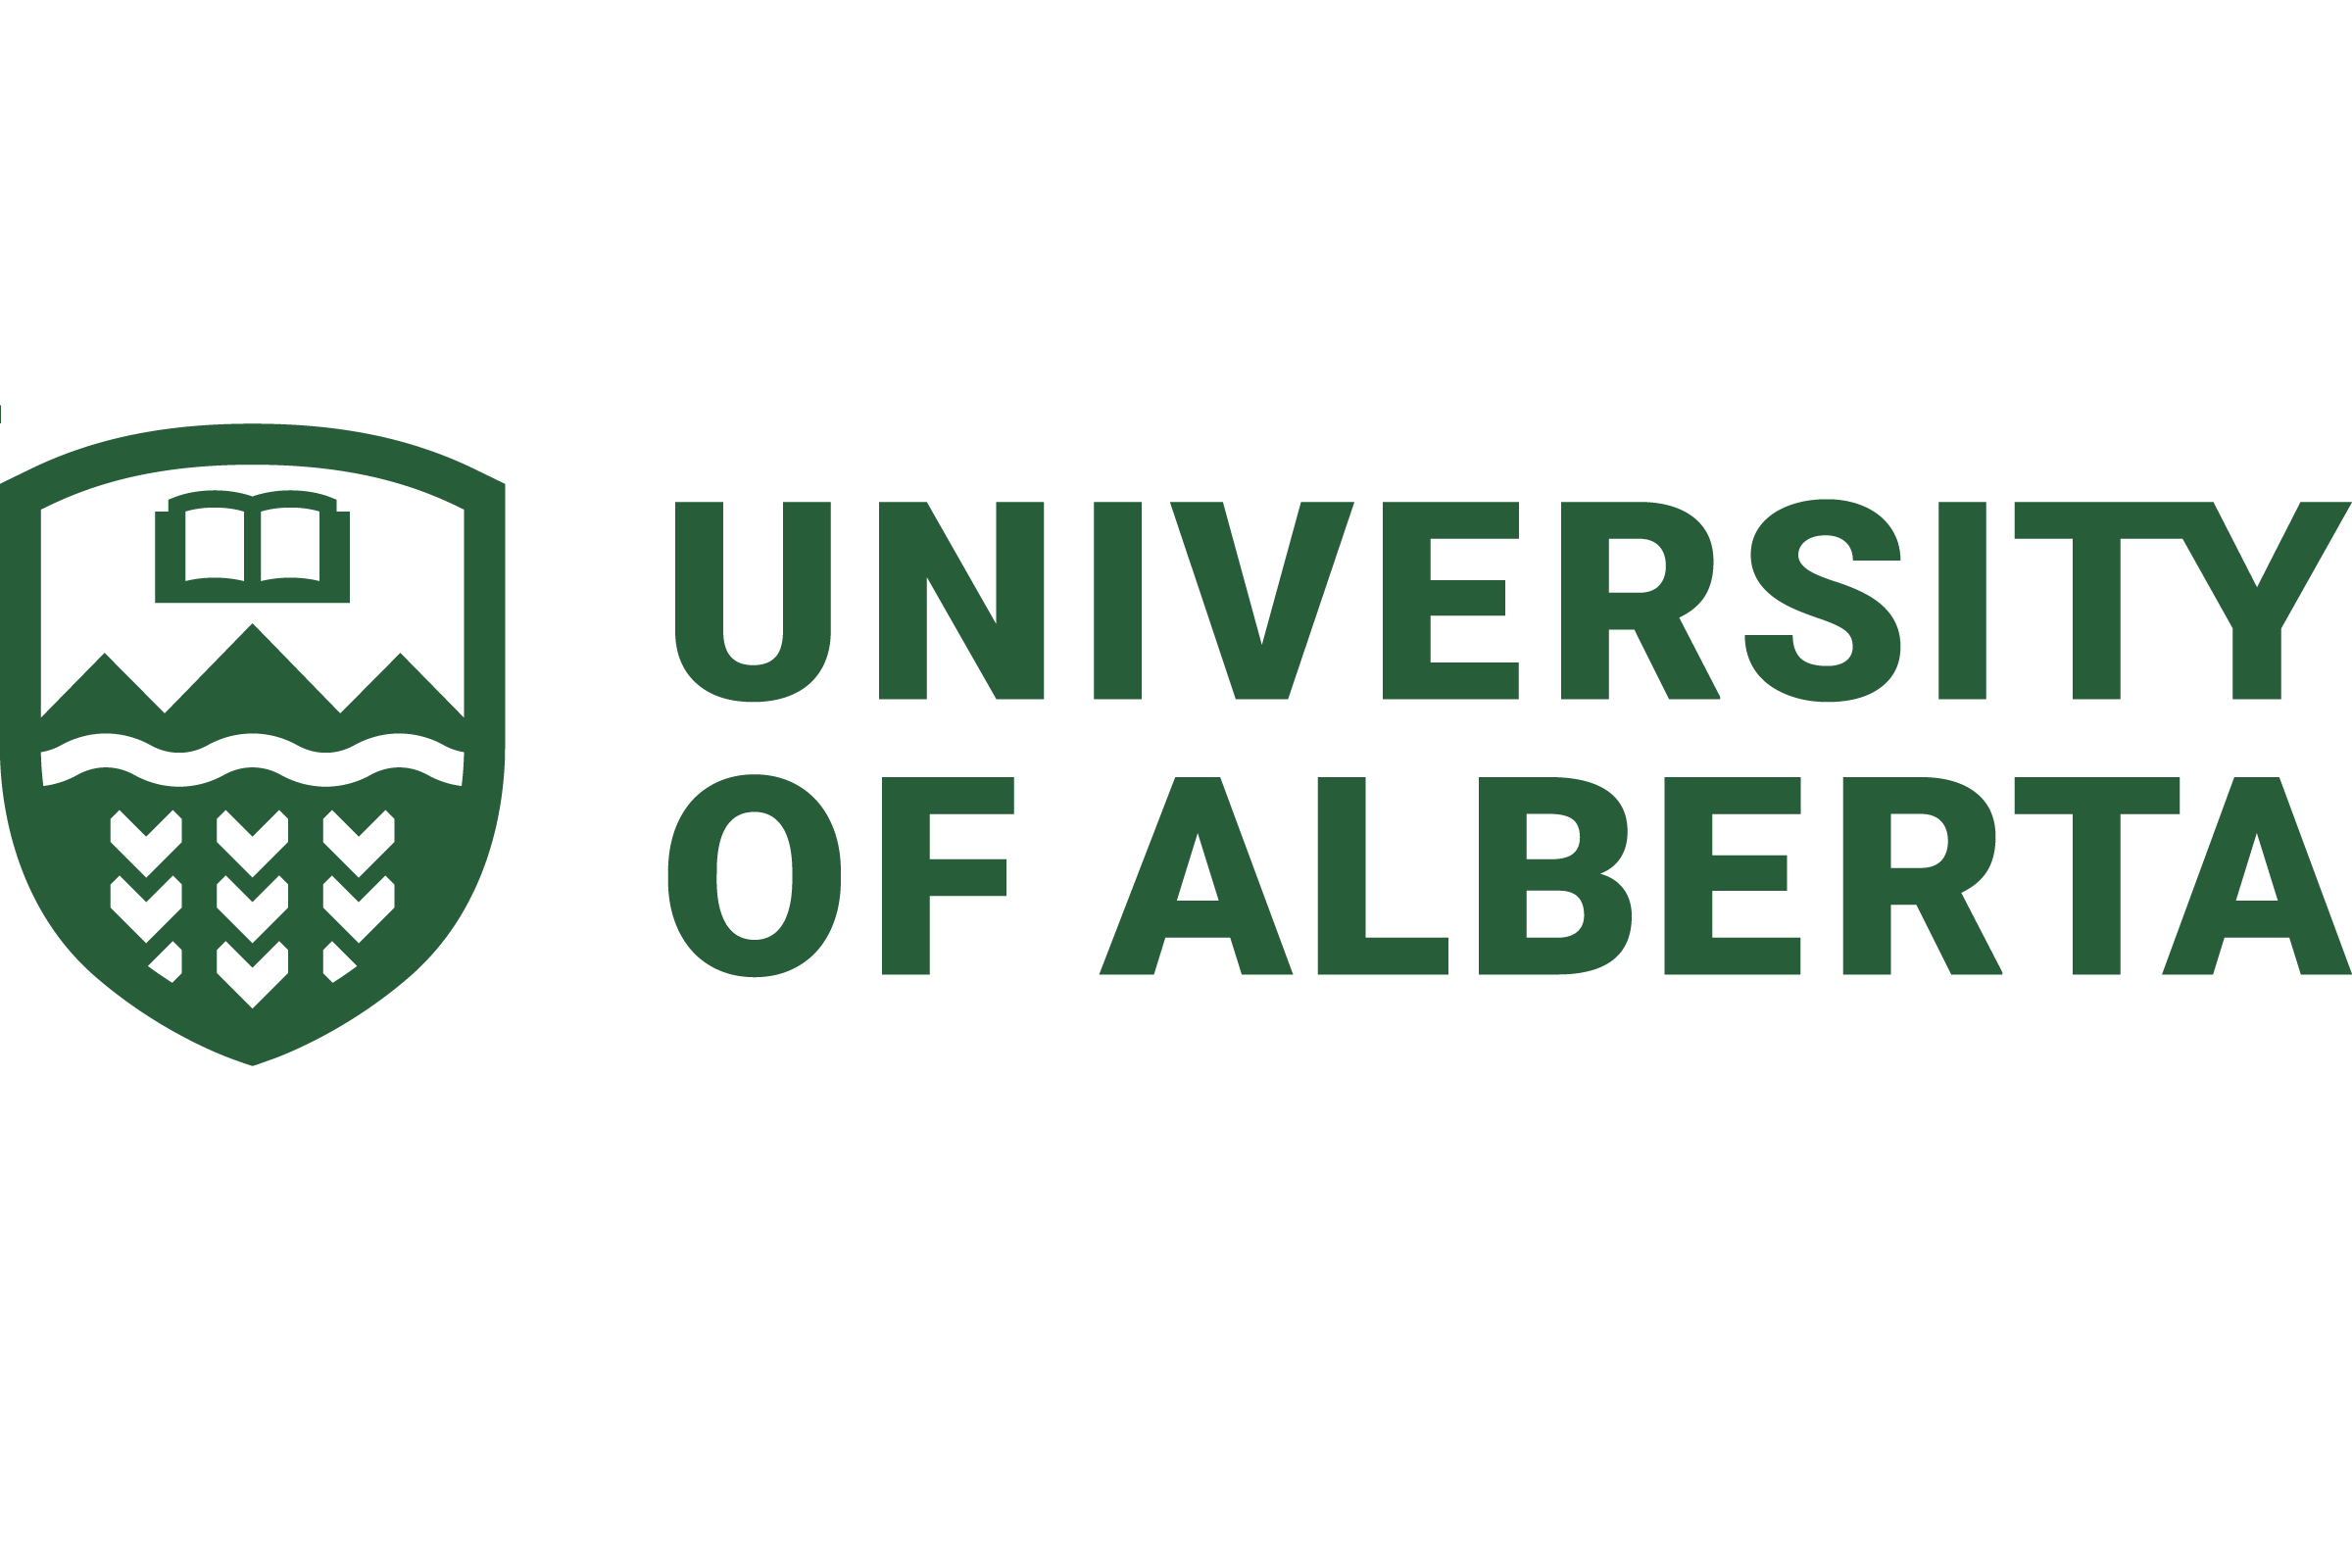 University of Alberta Logo.